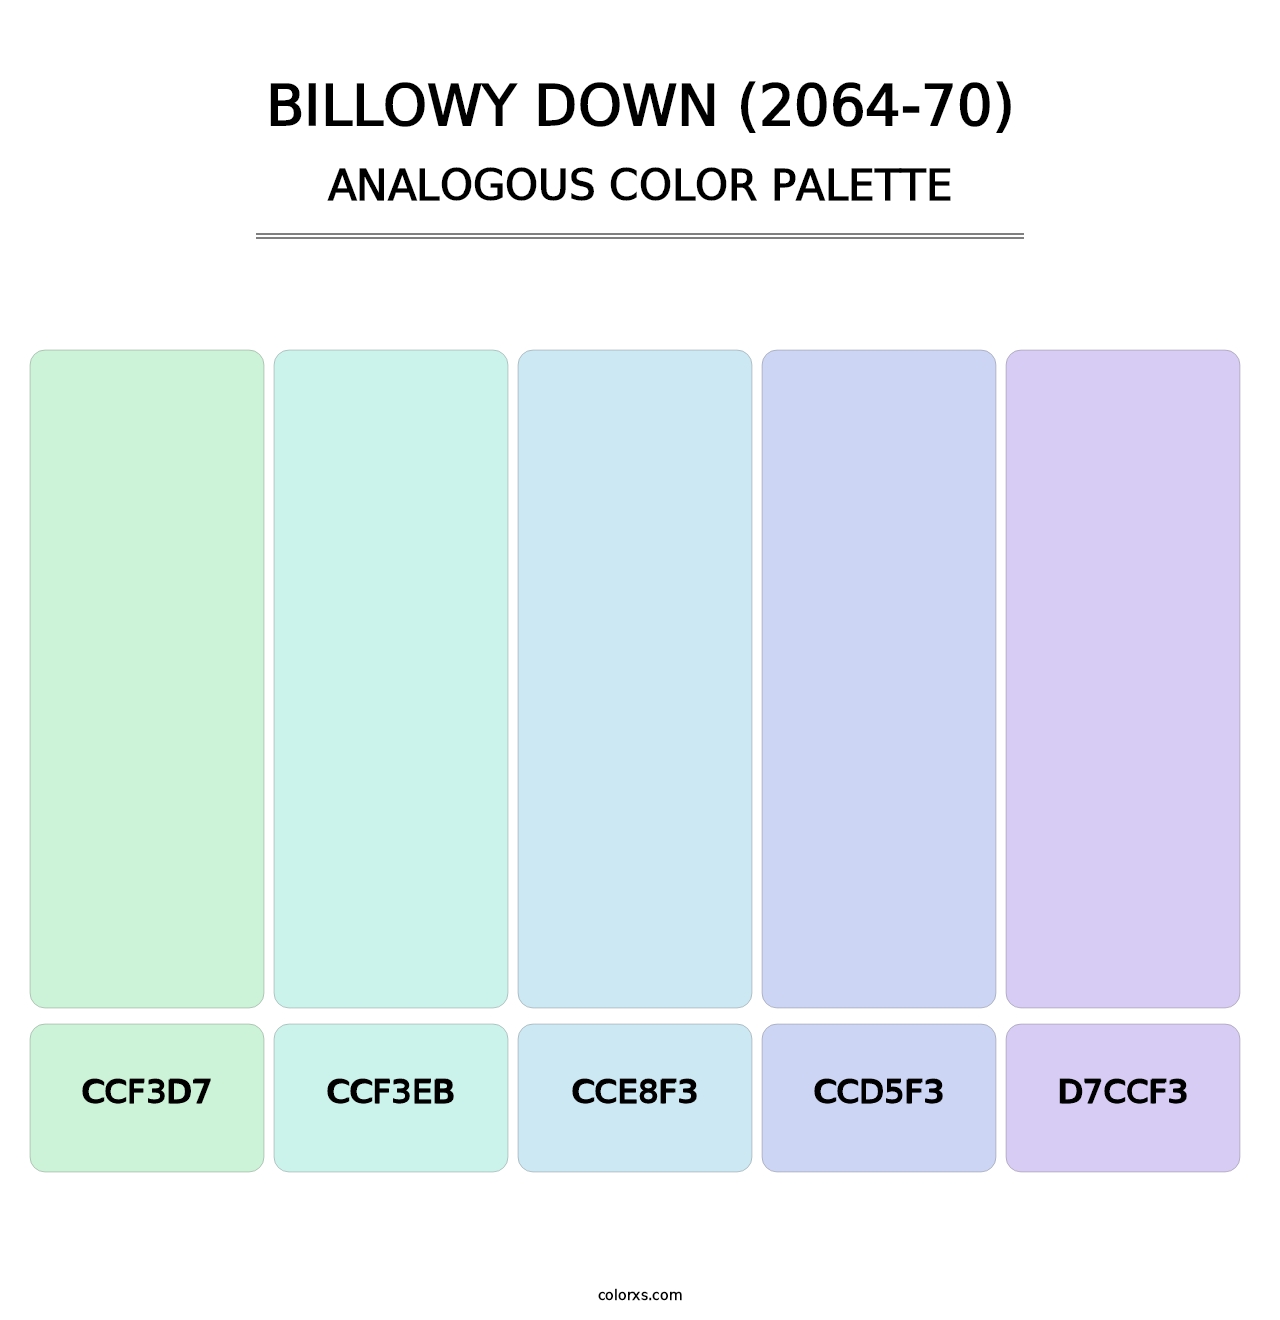 Billowy Down (2064-70) - Analogous Color Palette